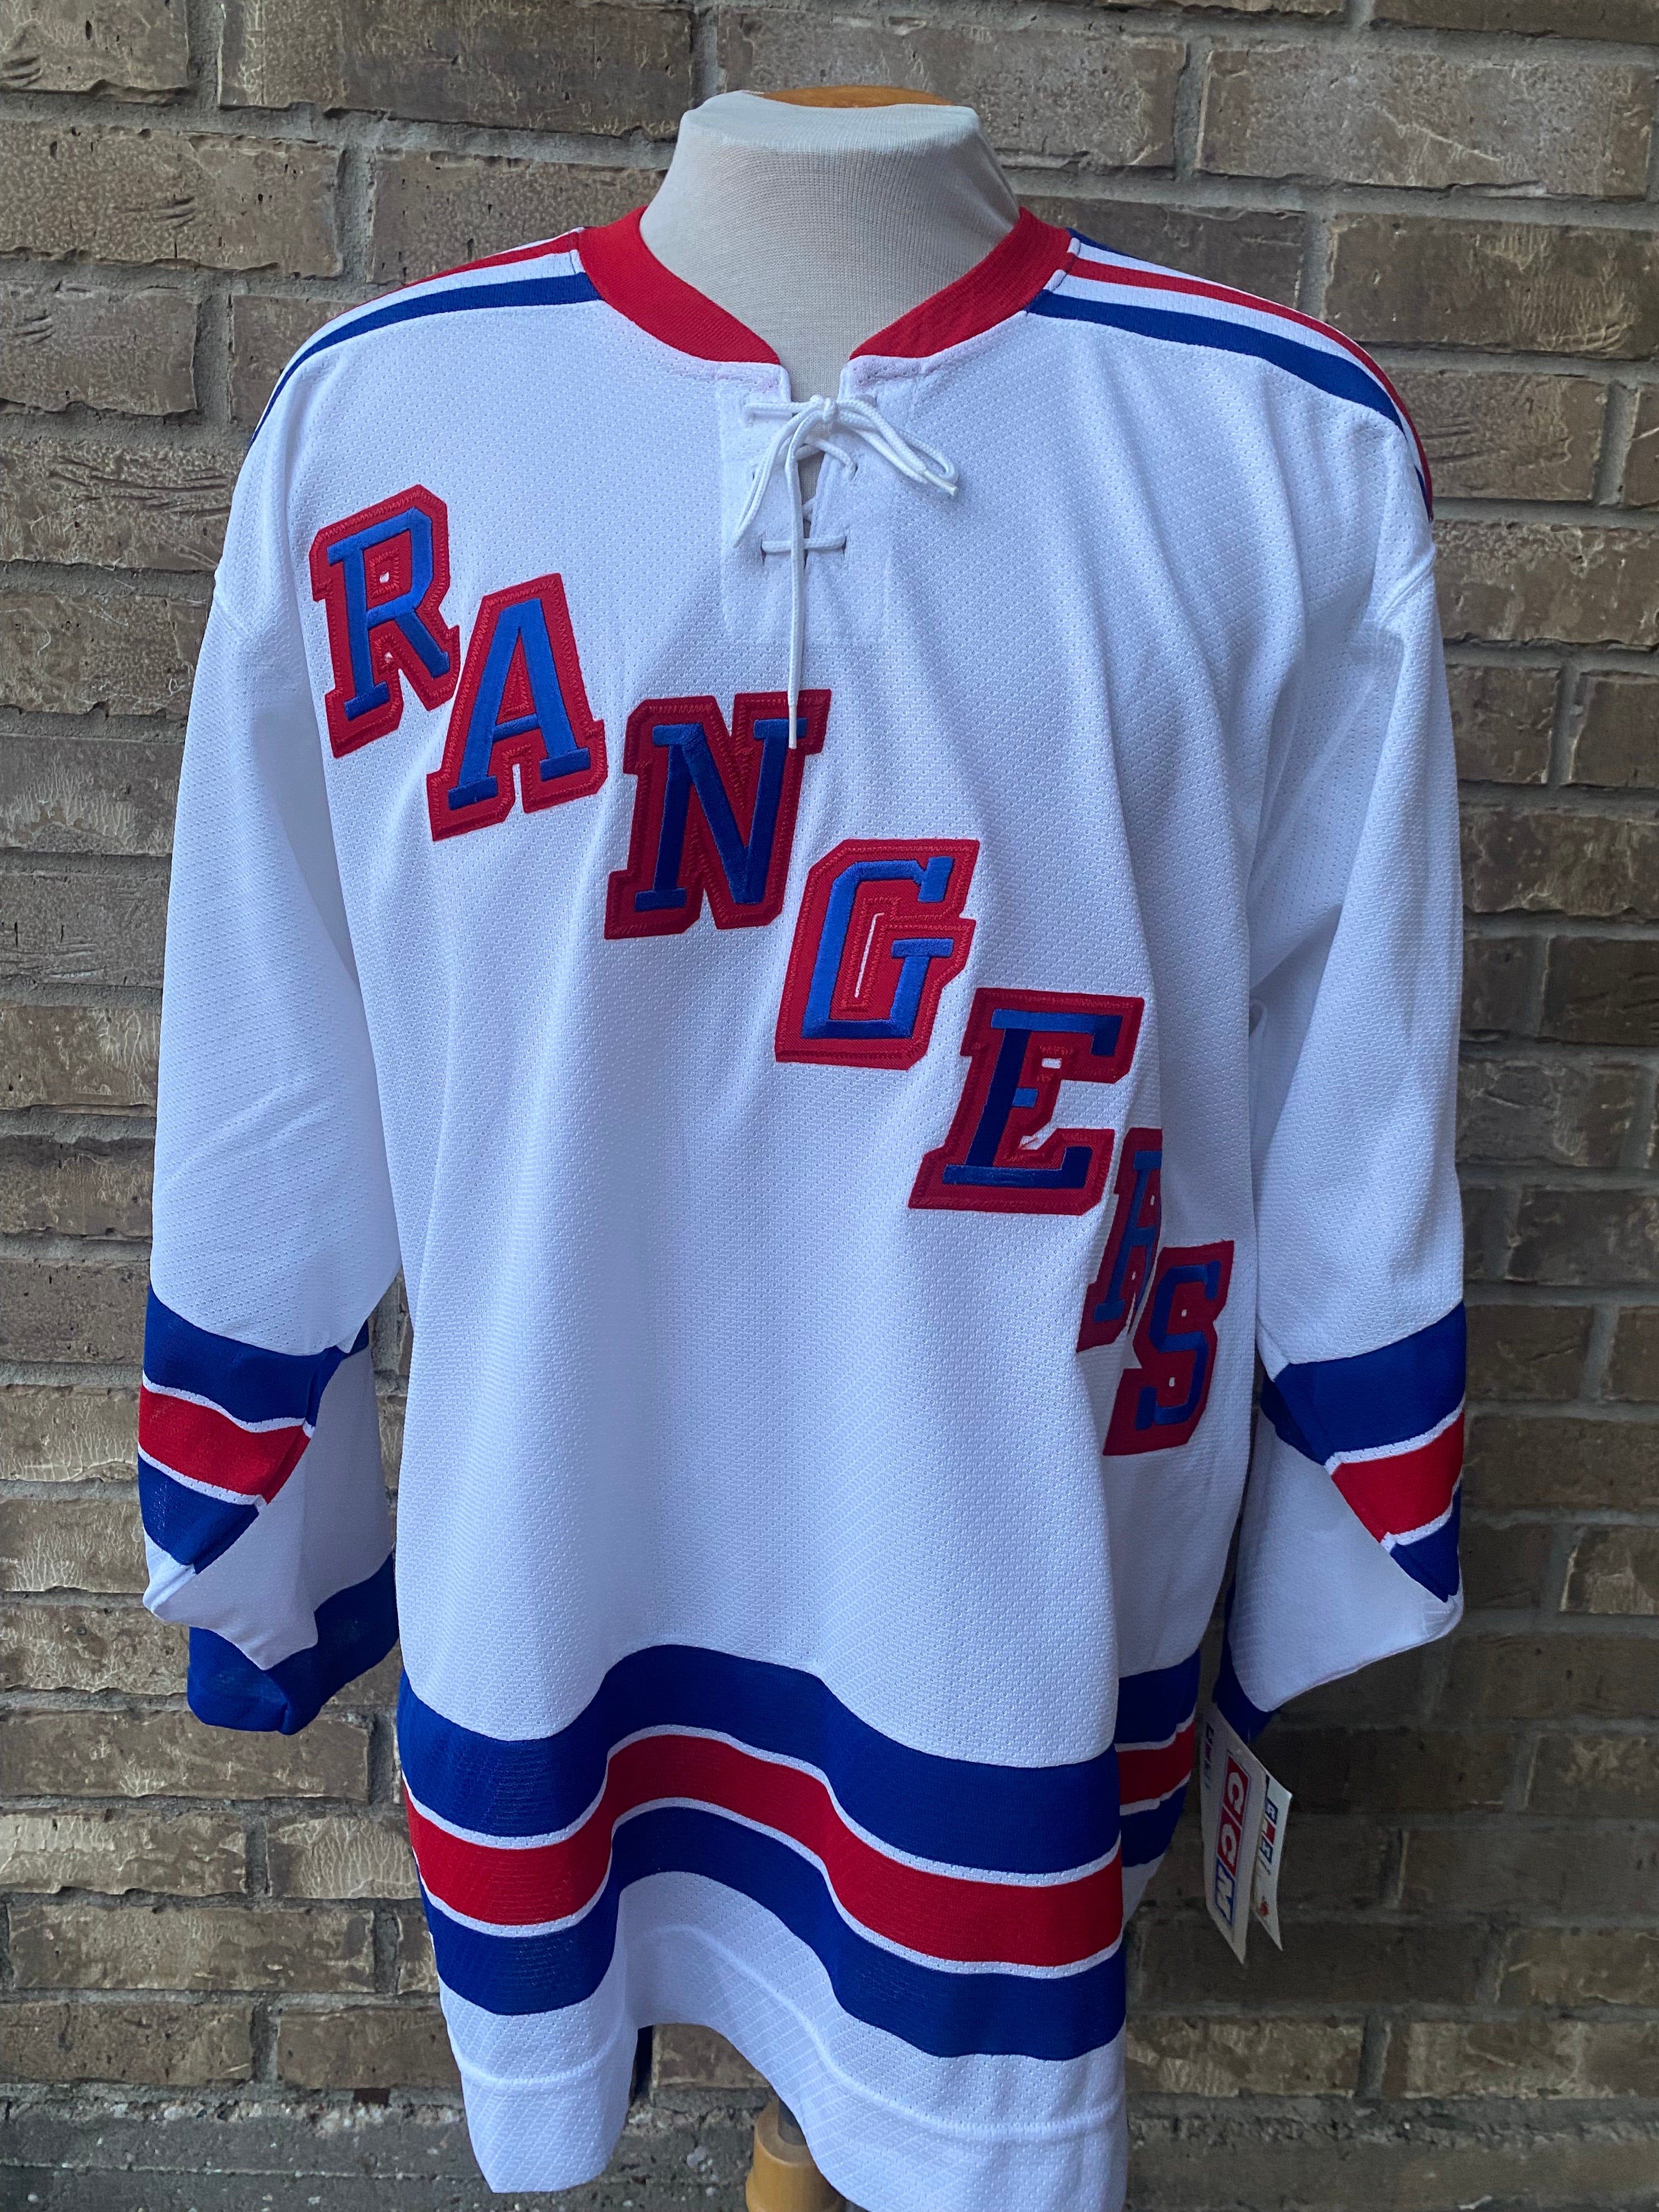 New York Rangers Jersey Mens Large L white lady liberty retro Pro Player NHL